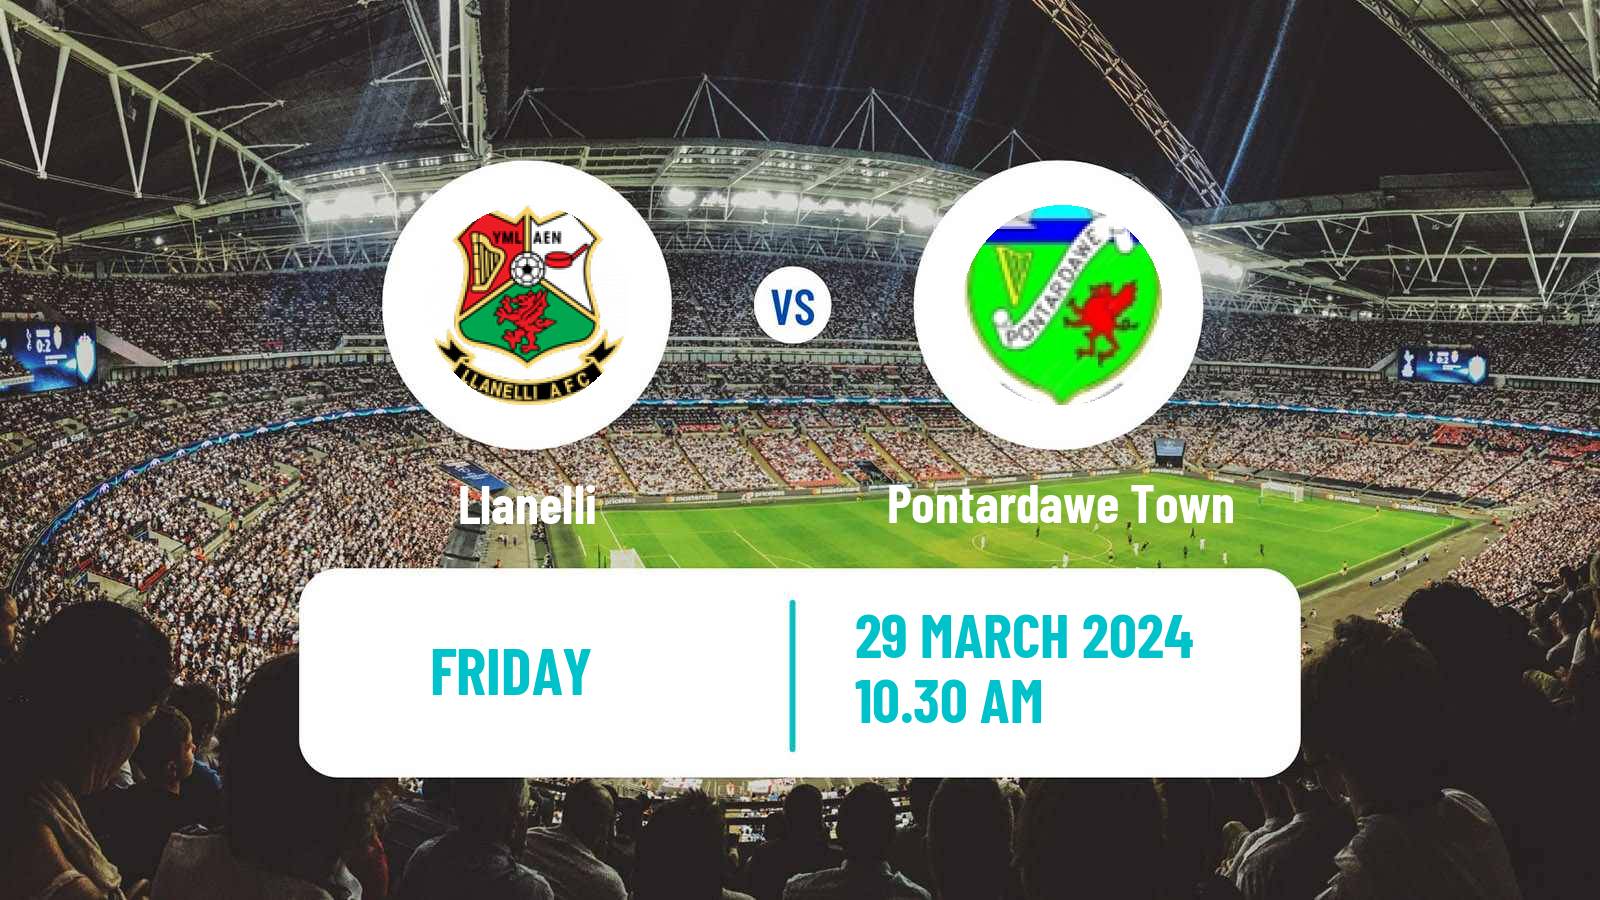 Soccer Welsh Cymru South Llanelli - Pontardawe Town